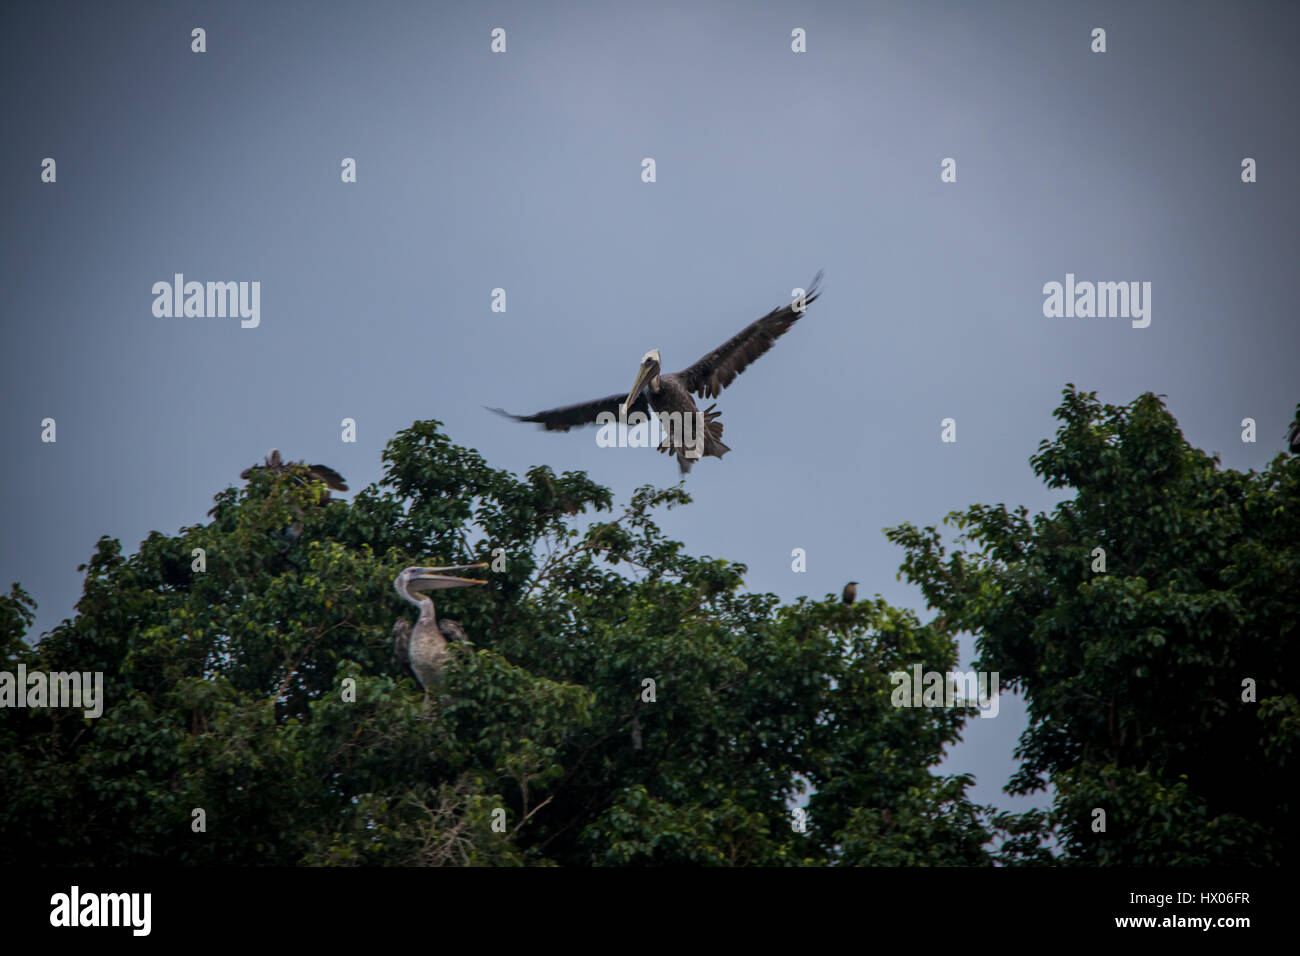 Brown pelican volando sopra un albero - Panama City, Panama Foto Stock